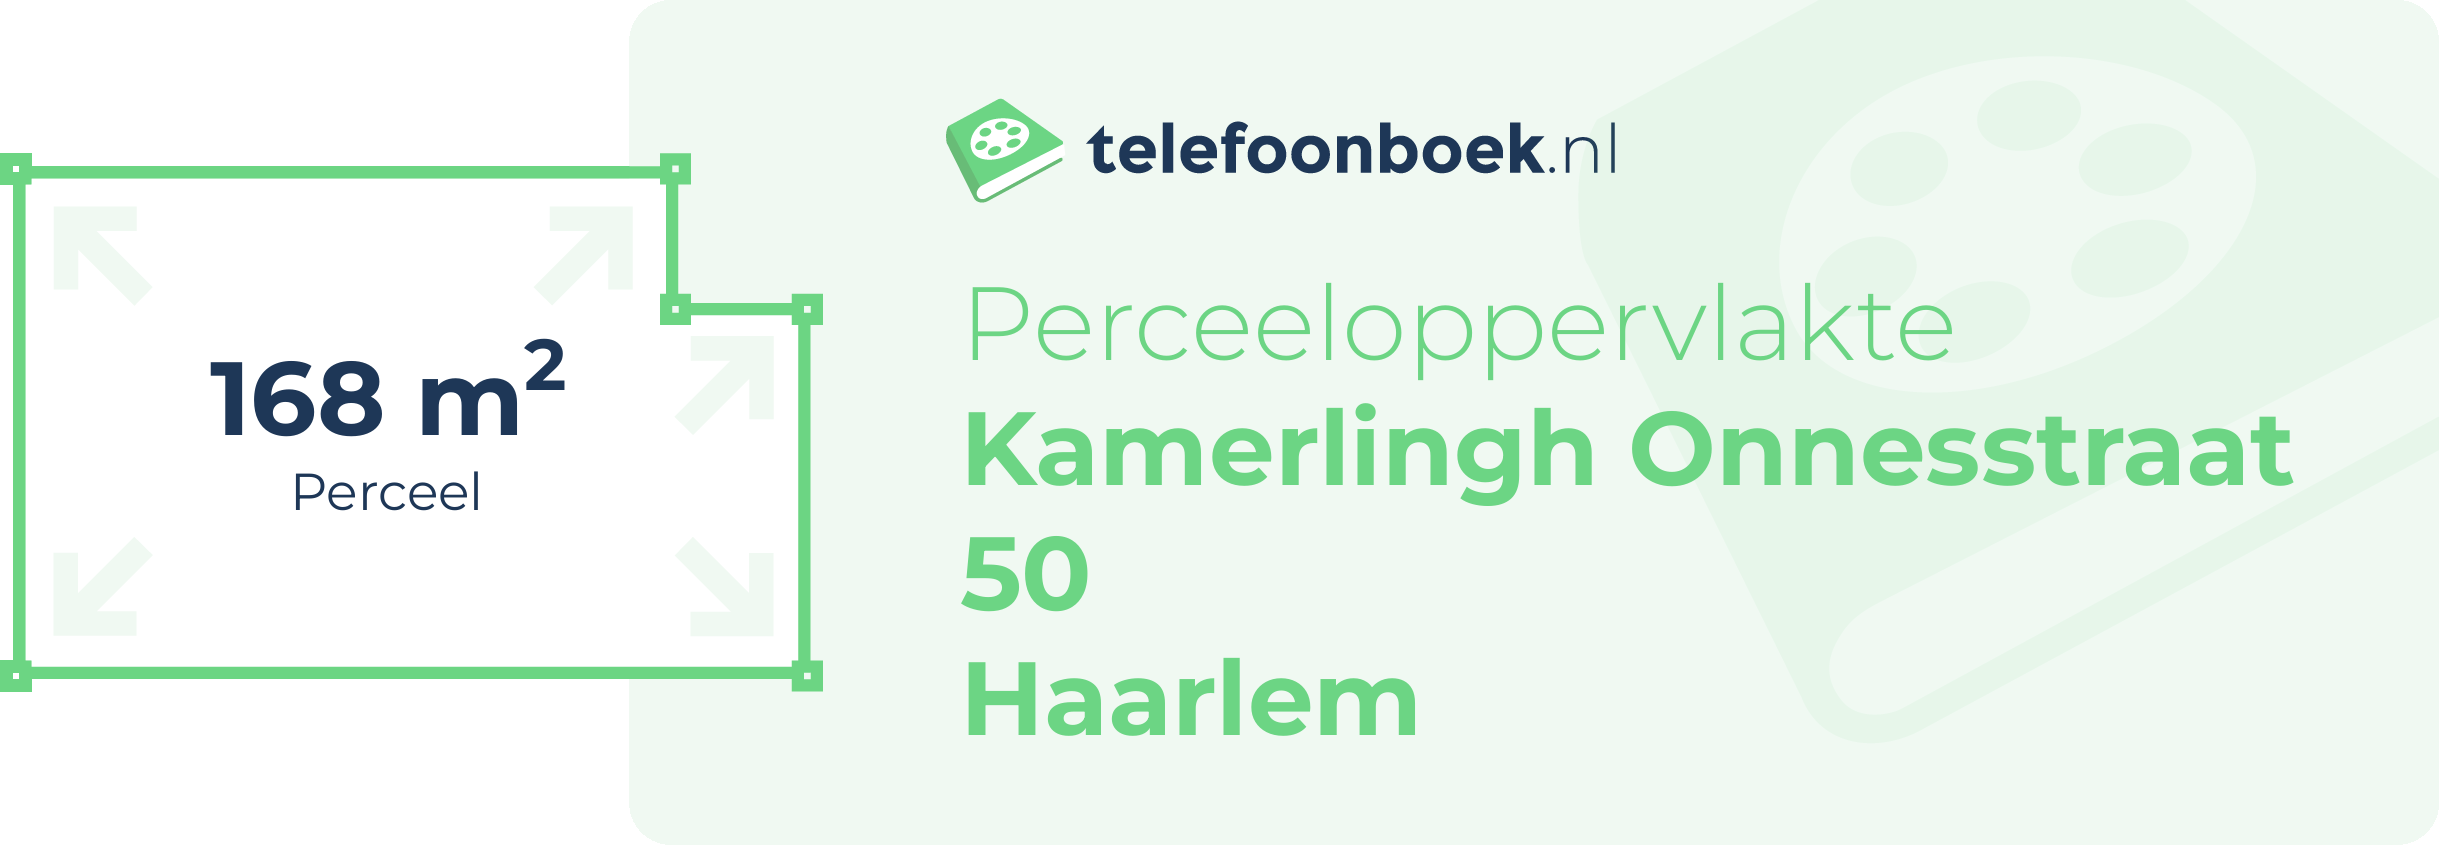 Perceeloppervlakte Kamerlingh Onnesstraat 50 Haarlem